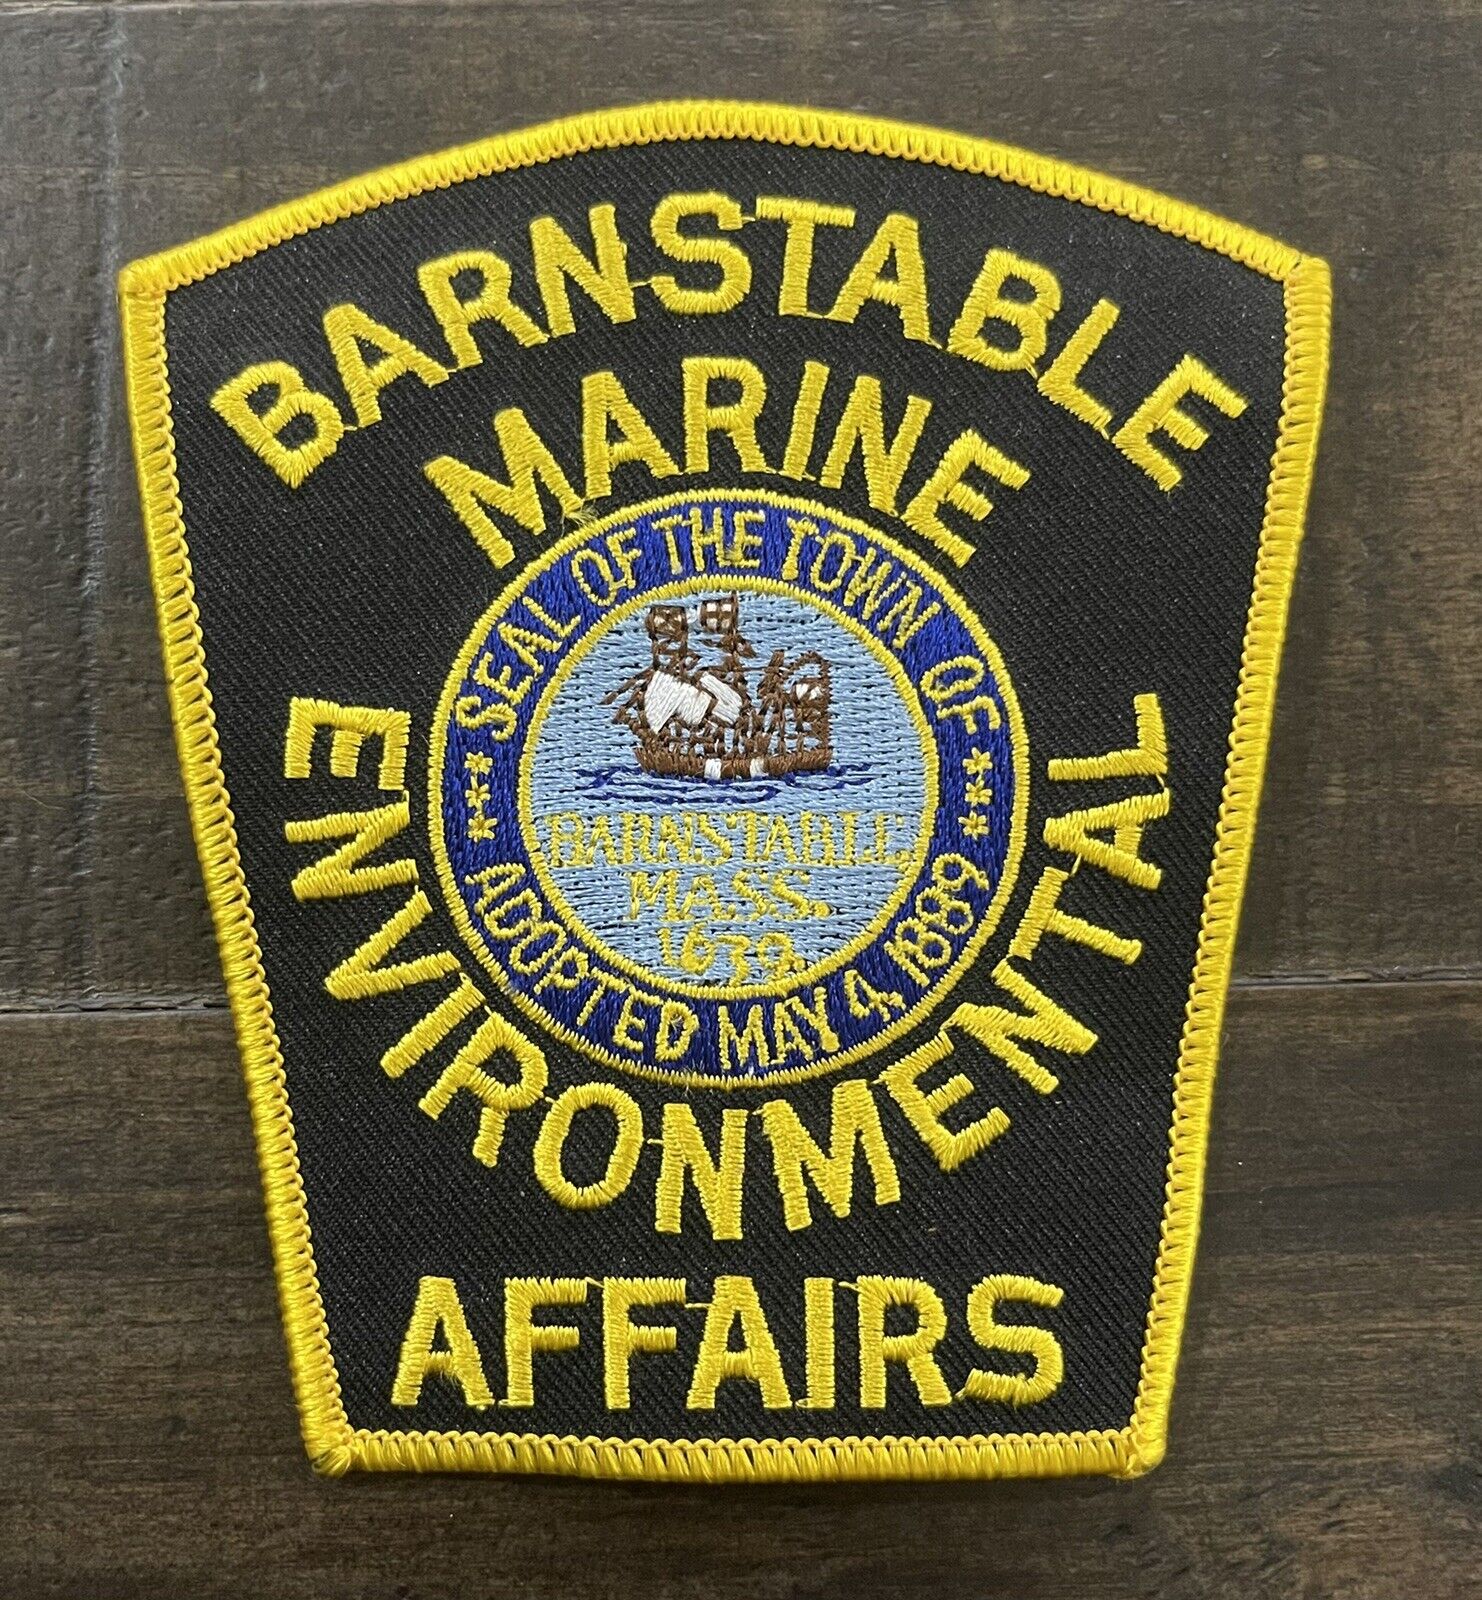 Barnstable, Massachusetts Marine Environmental Affairs Patch, MA Patch